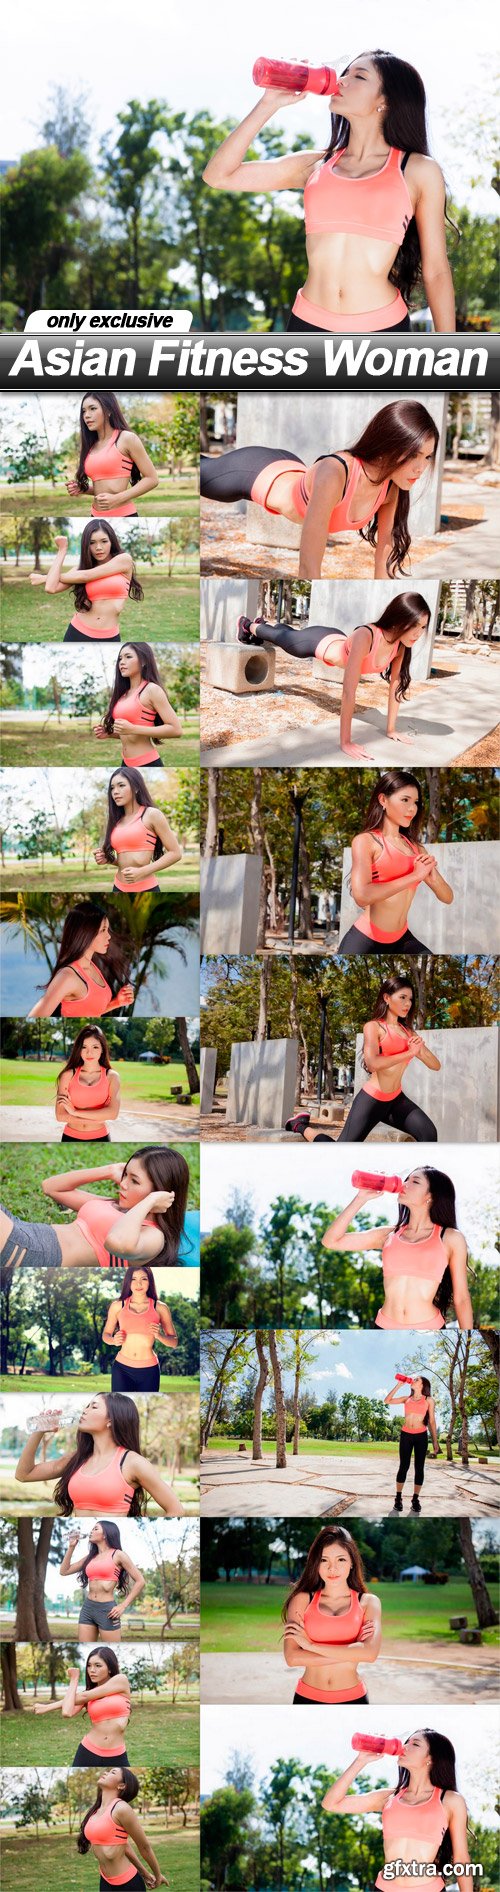 Asian Fitness Woman - 20 UHQ JPEG